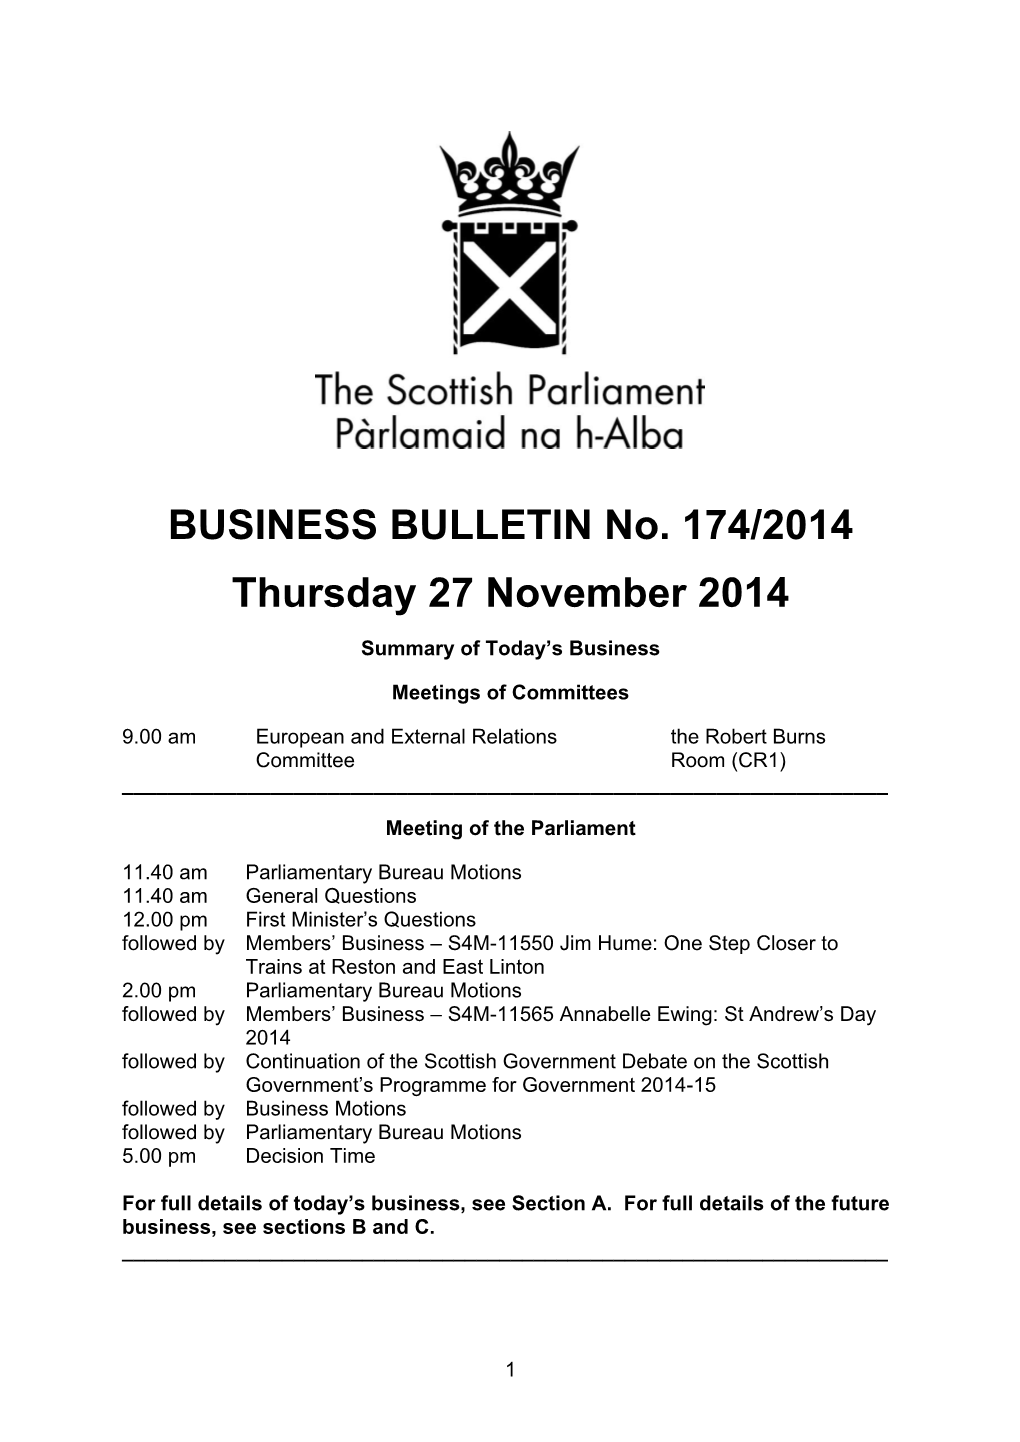 BUSINESS BULLETIN No. 174/2014 Thursday 27 November 2014